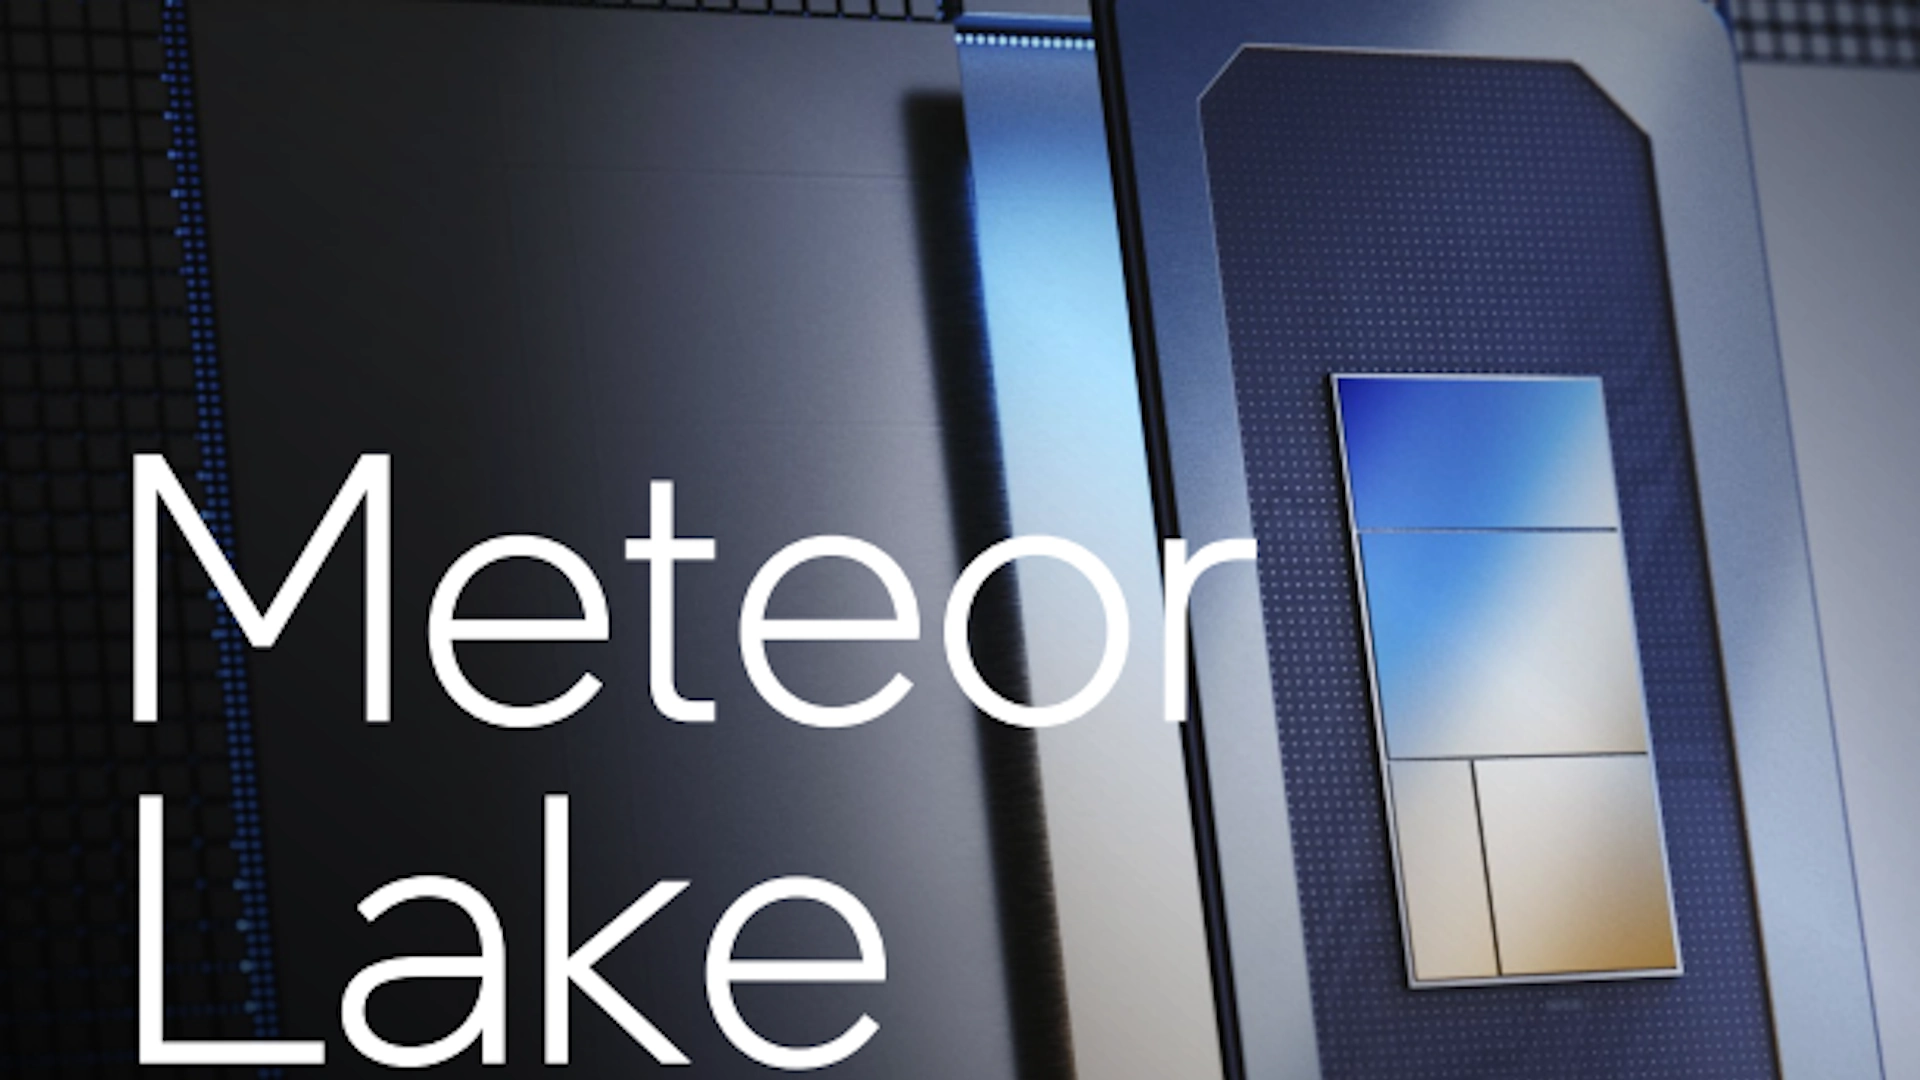 Intel Meteor Lake Arc GPU: First performance results indicate Radeon 780M iGPU level